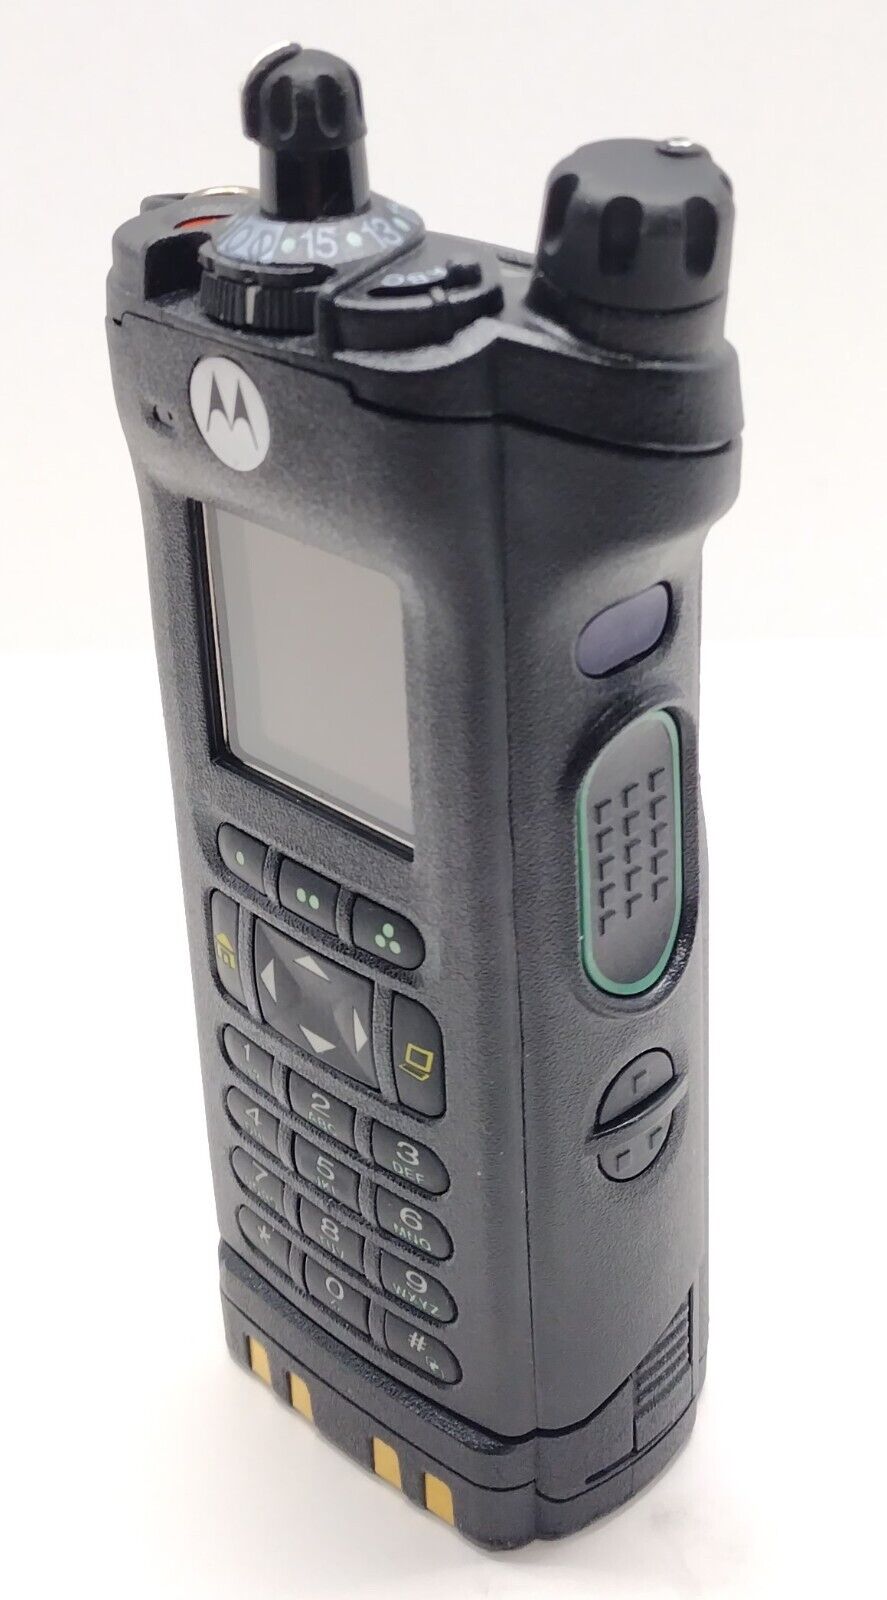 H98KGH9PW7AN MOTOROLA APX6000 VHF 136-174 MHz TWO-WAY RADIO P25 TDMA BT AES-256